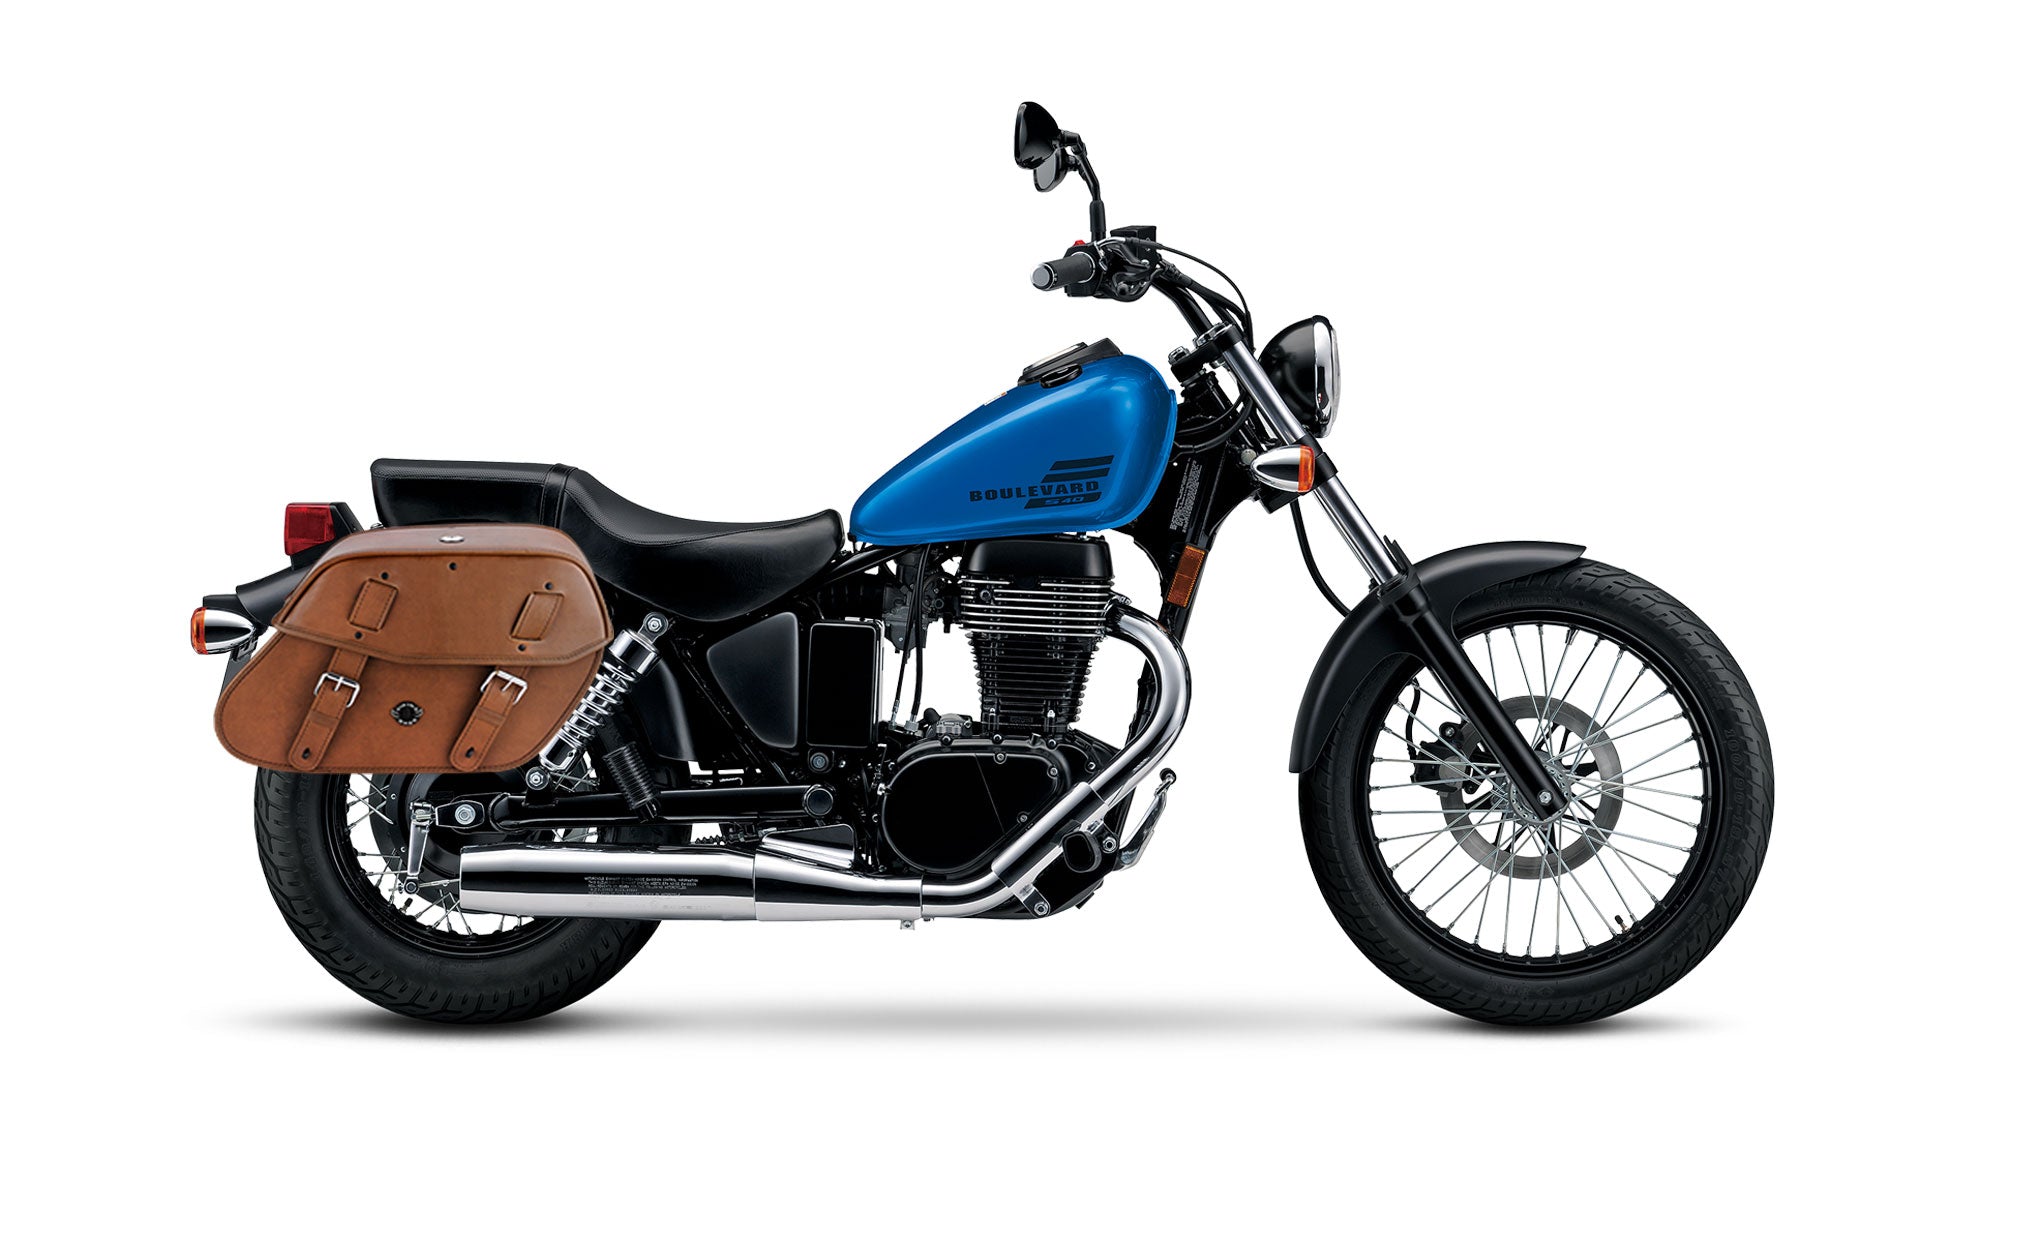 Viking Odin Brown Large Suzuki Boulevard S40 Savage Ls650 Leather Motorcycle Saddlebags on Bike Photo @expand